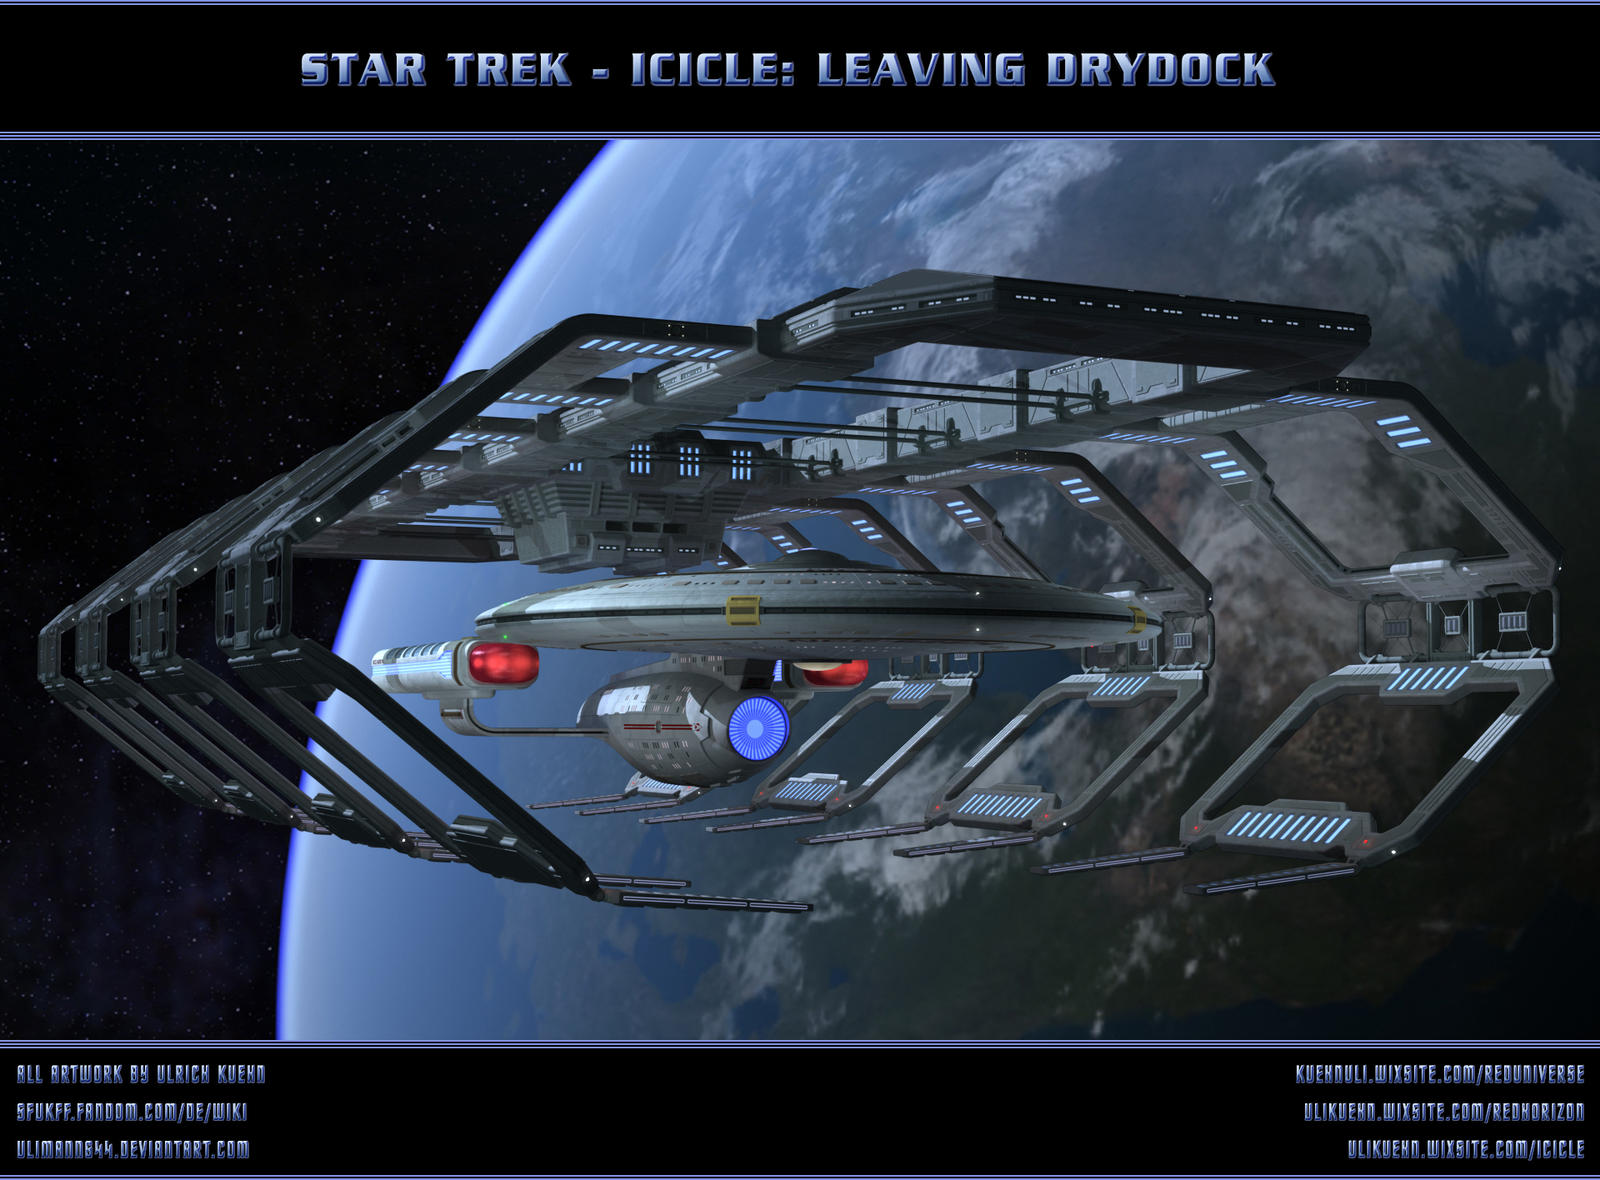 STAR TREK - ICICLE: Leaving Drydock